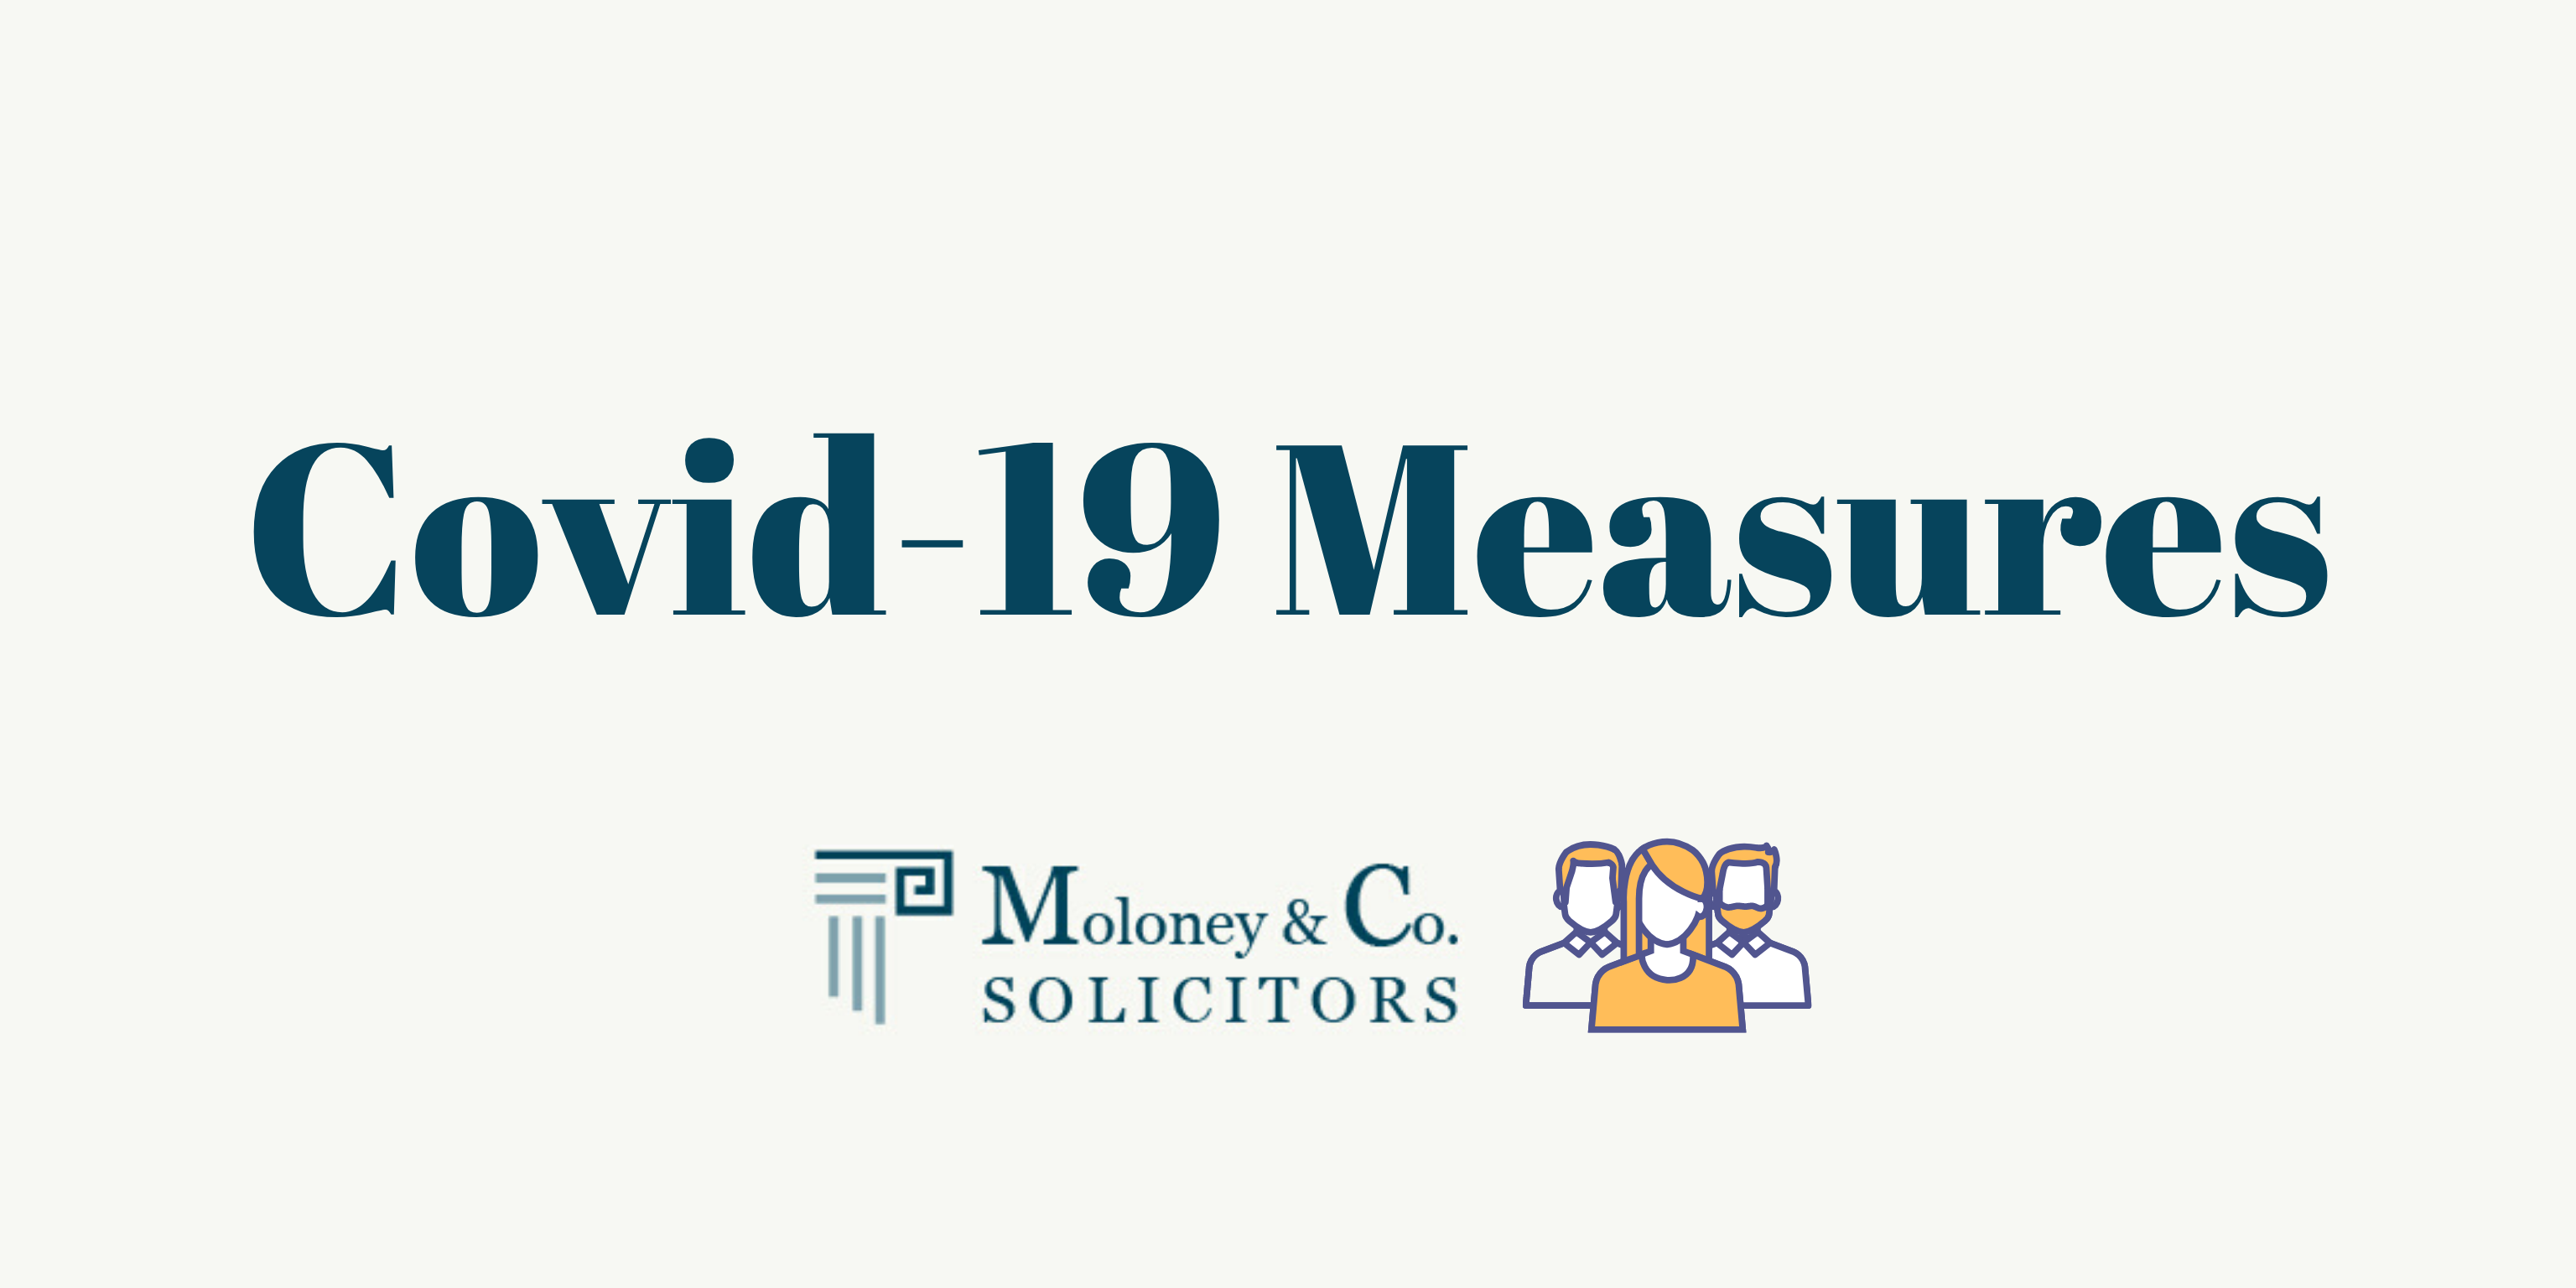 Covid-19 Measures